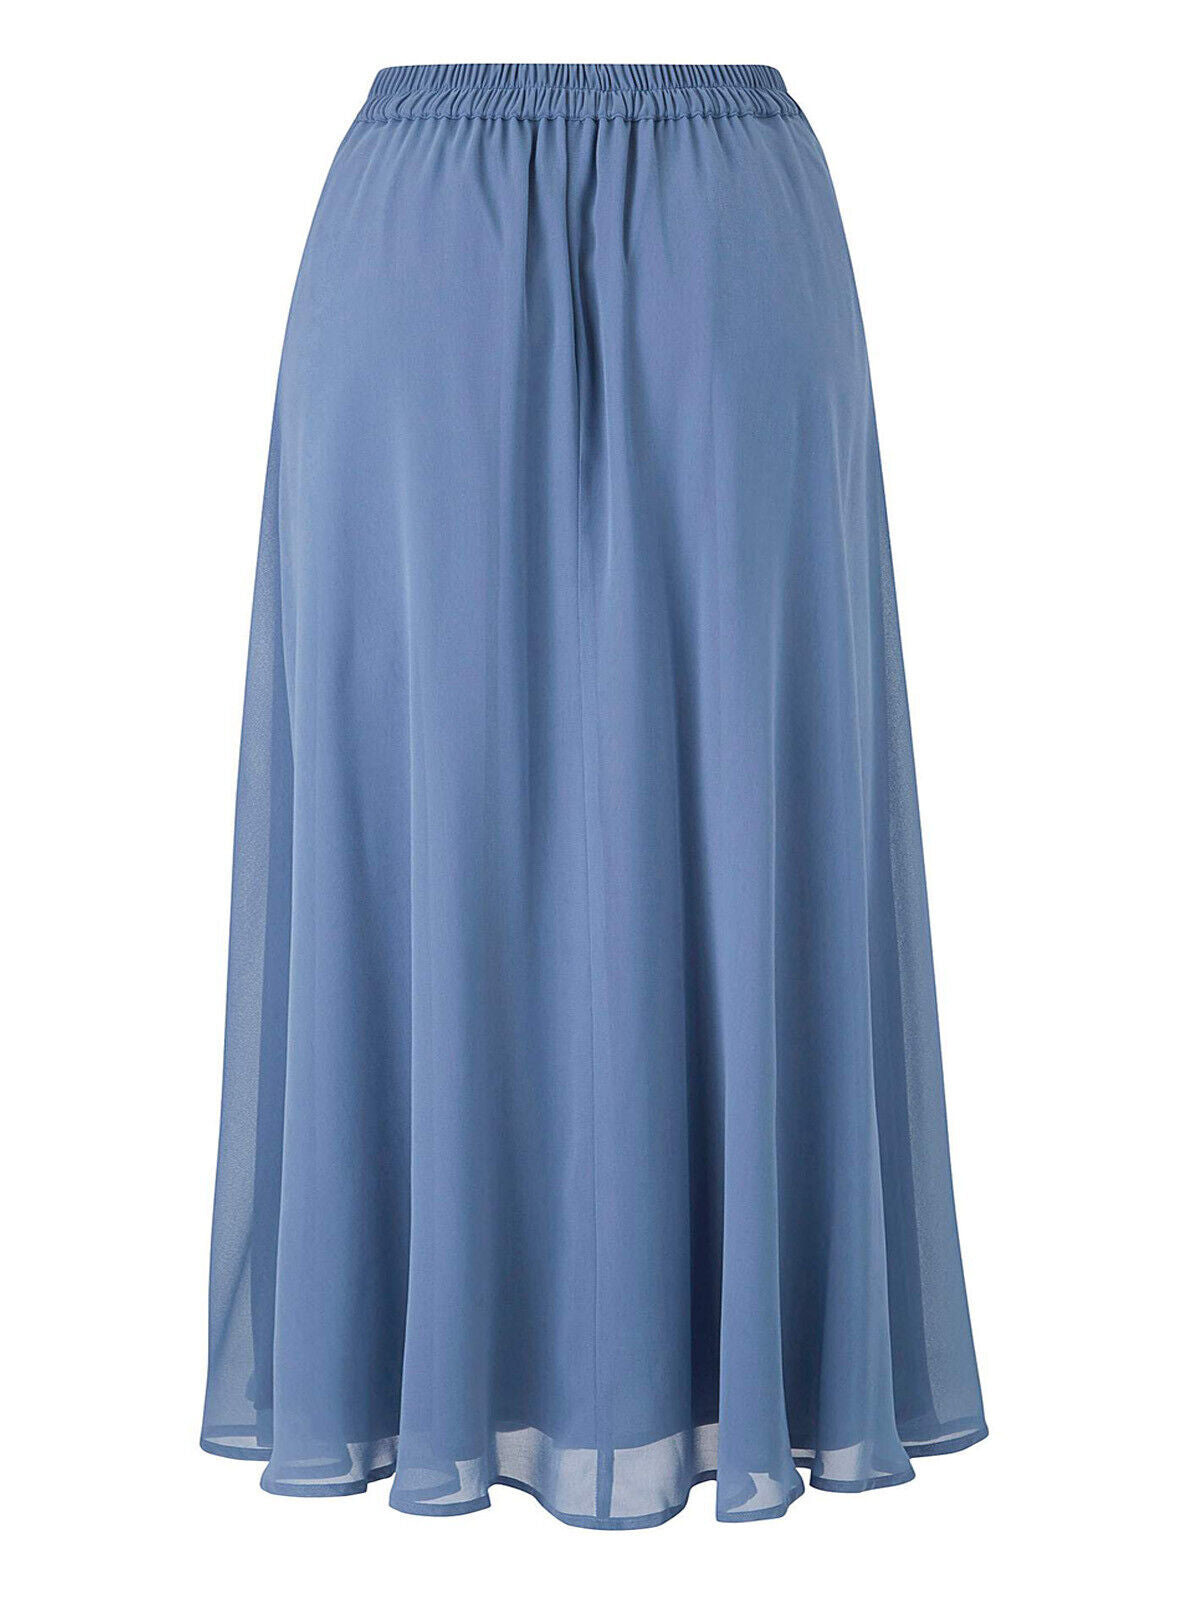 Capsule Smokey Blue Floaty Georgette Maxi Skirt Sizes 16 18 20 22 24 26 28 30 32